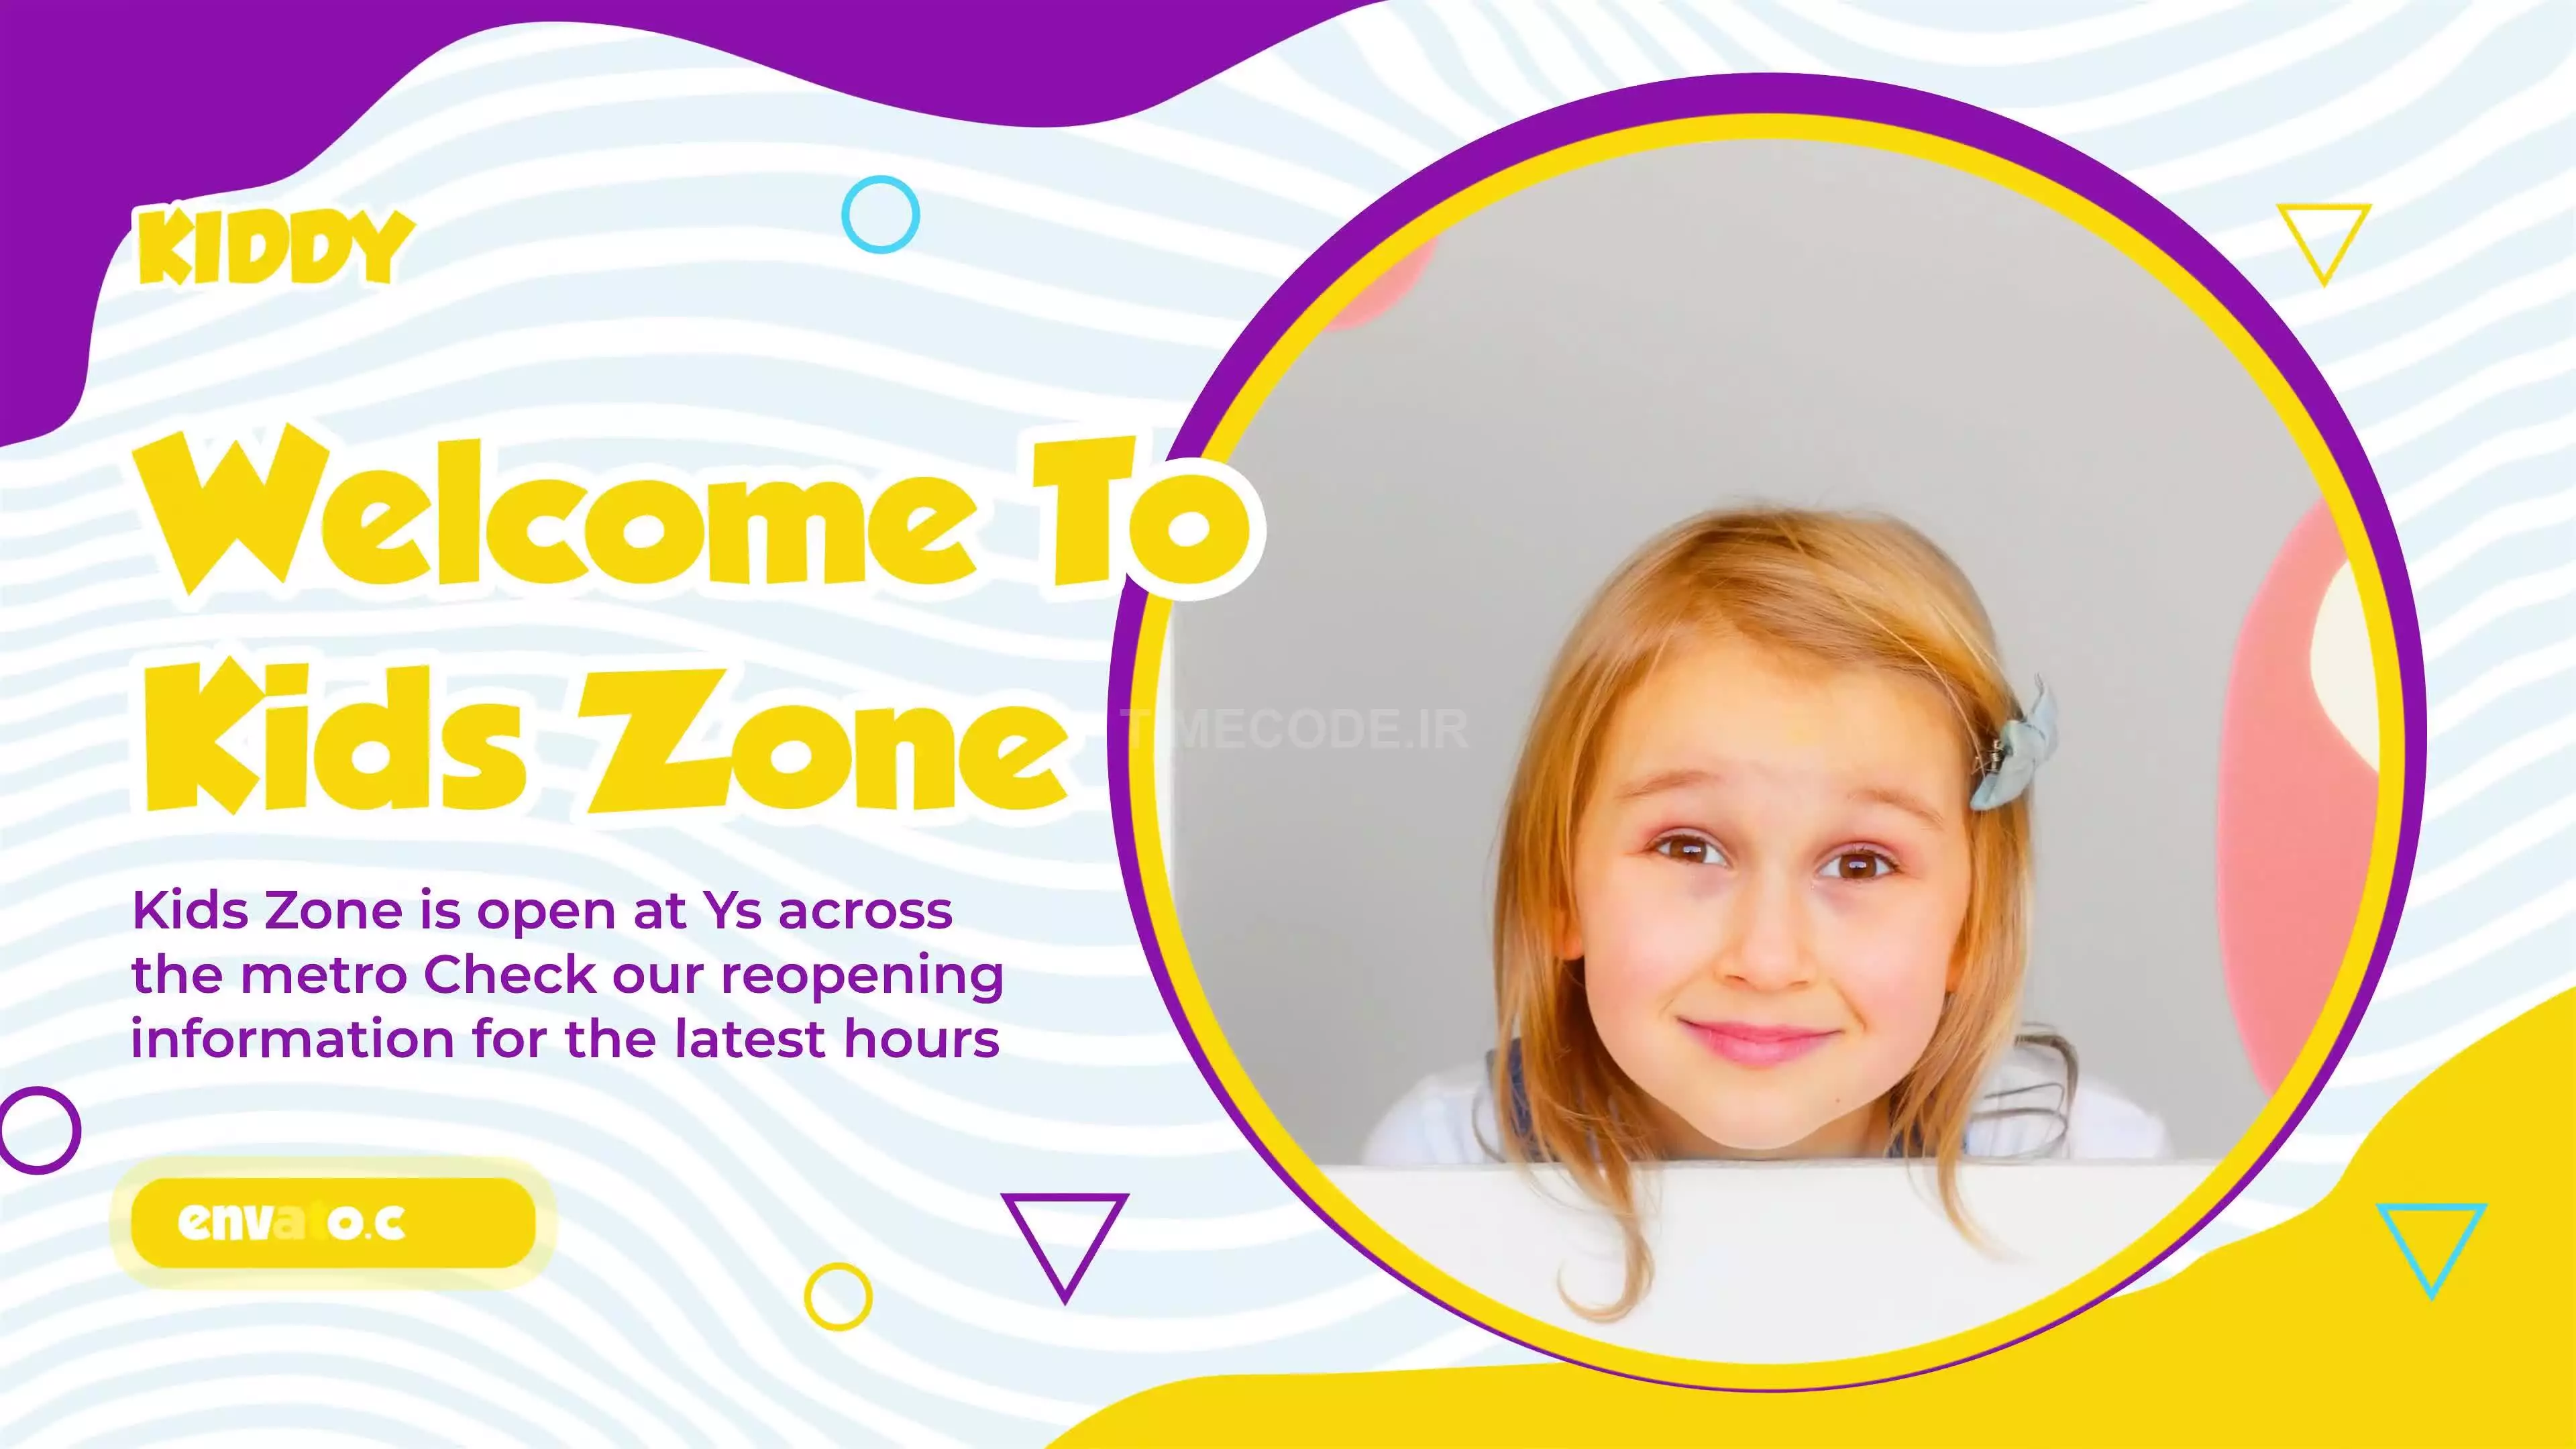 Kids Zone Slideshow